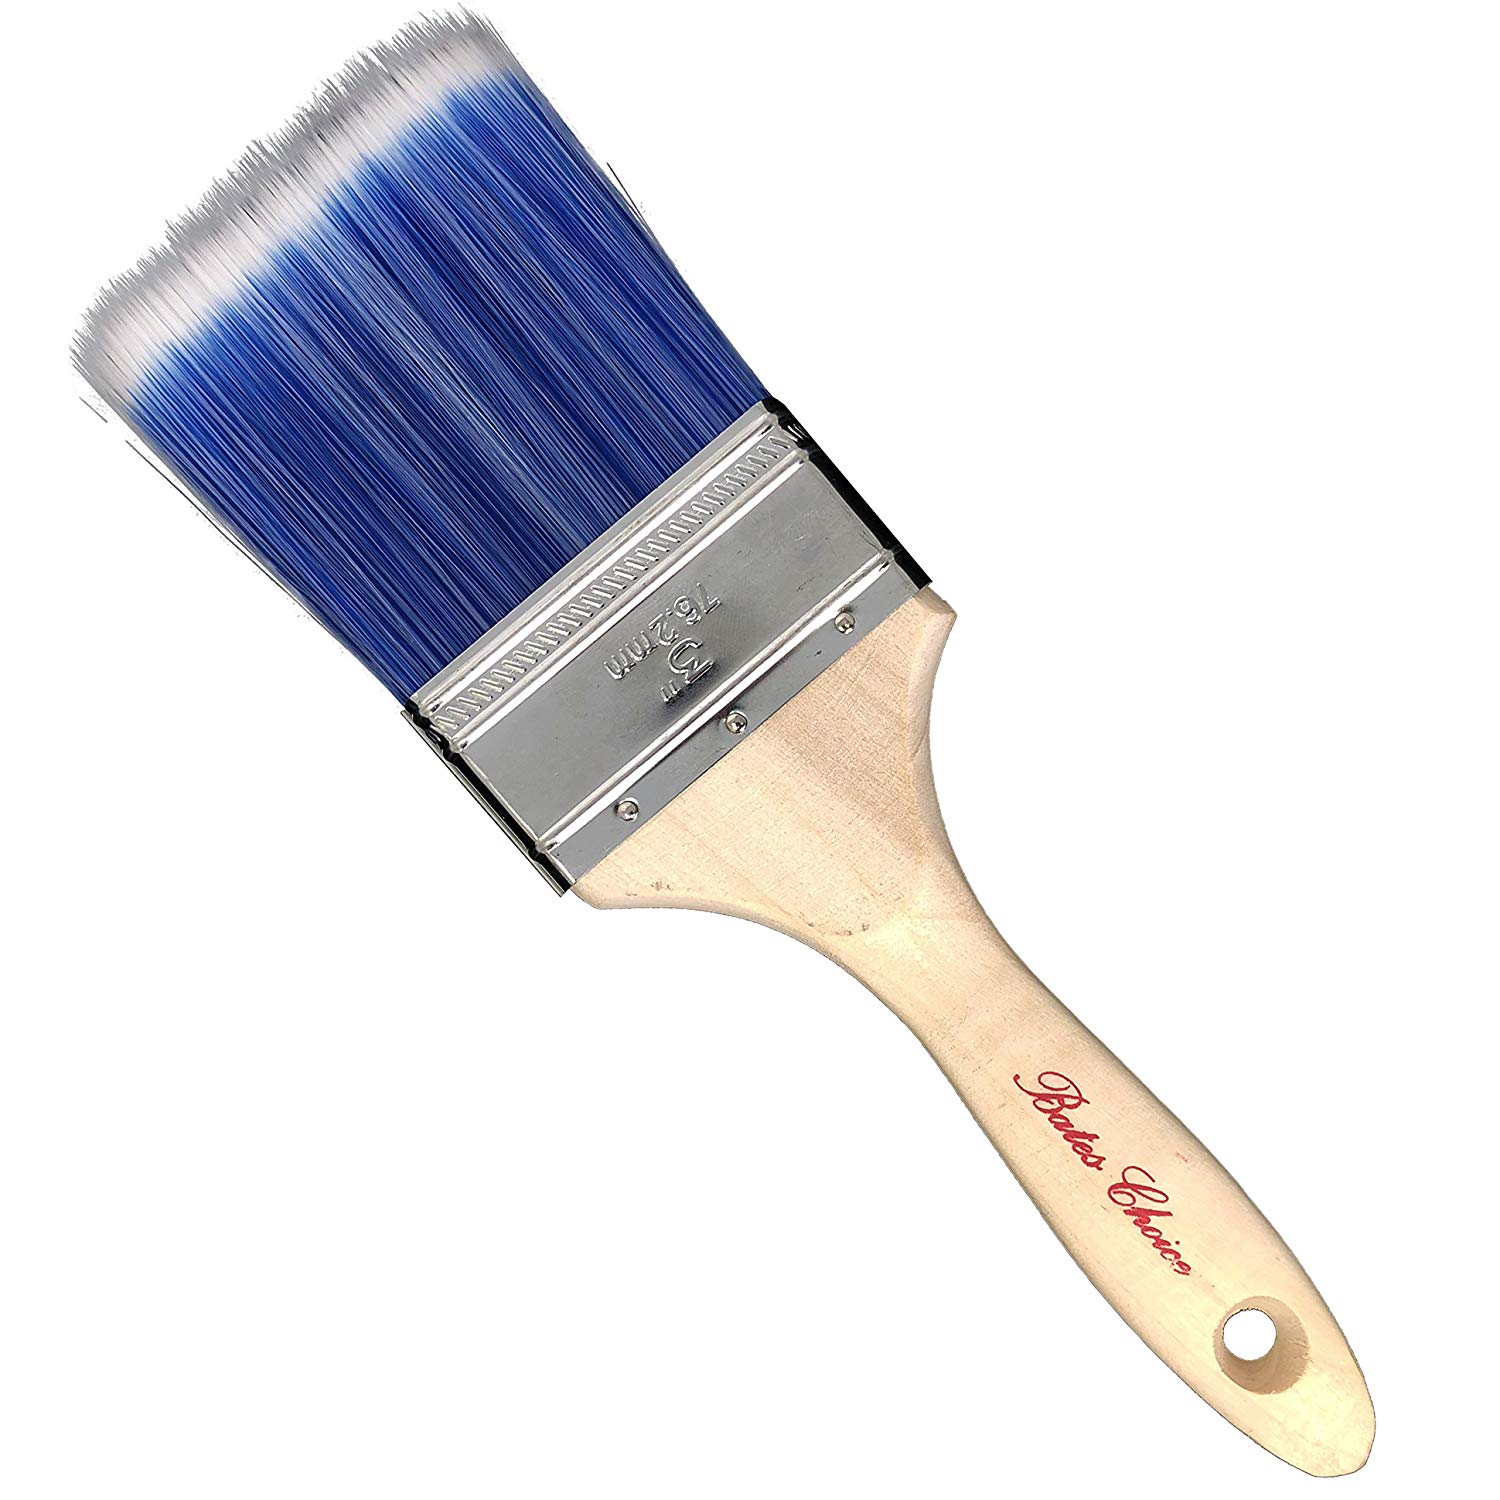 Bates Paint Brushes 4 Pack, Wood Handle, Paint Brush